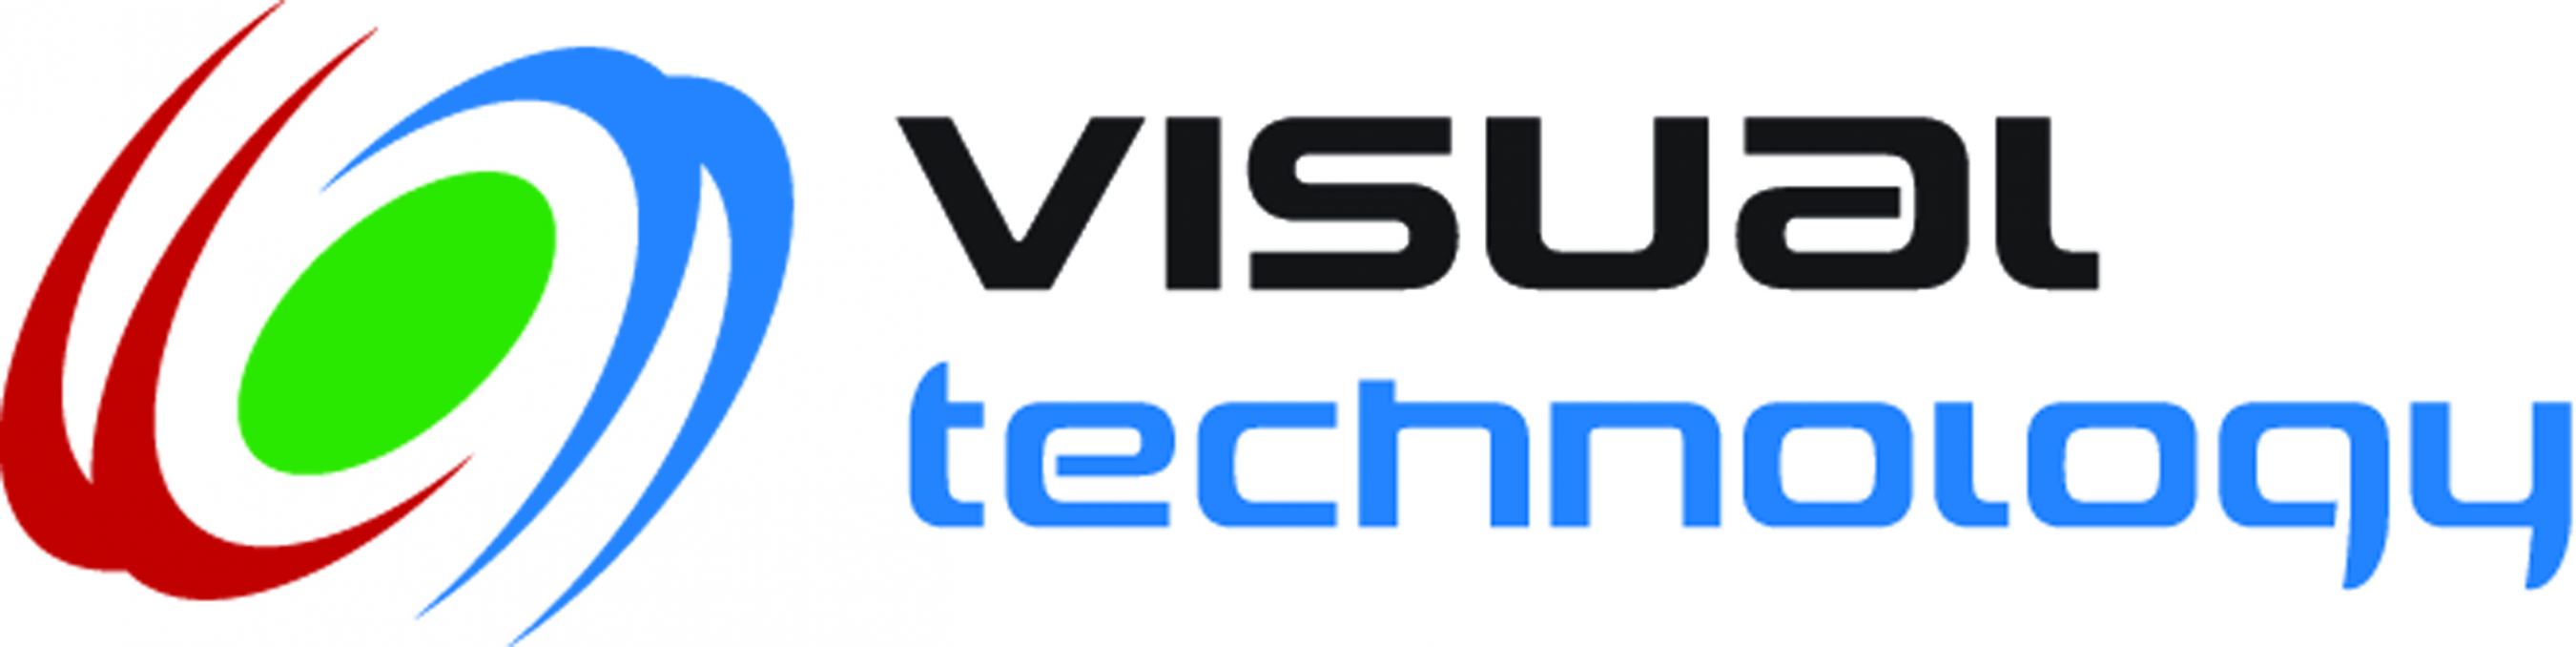 Visual Technology Logo